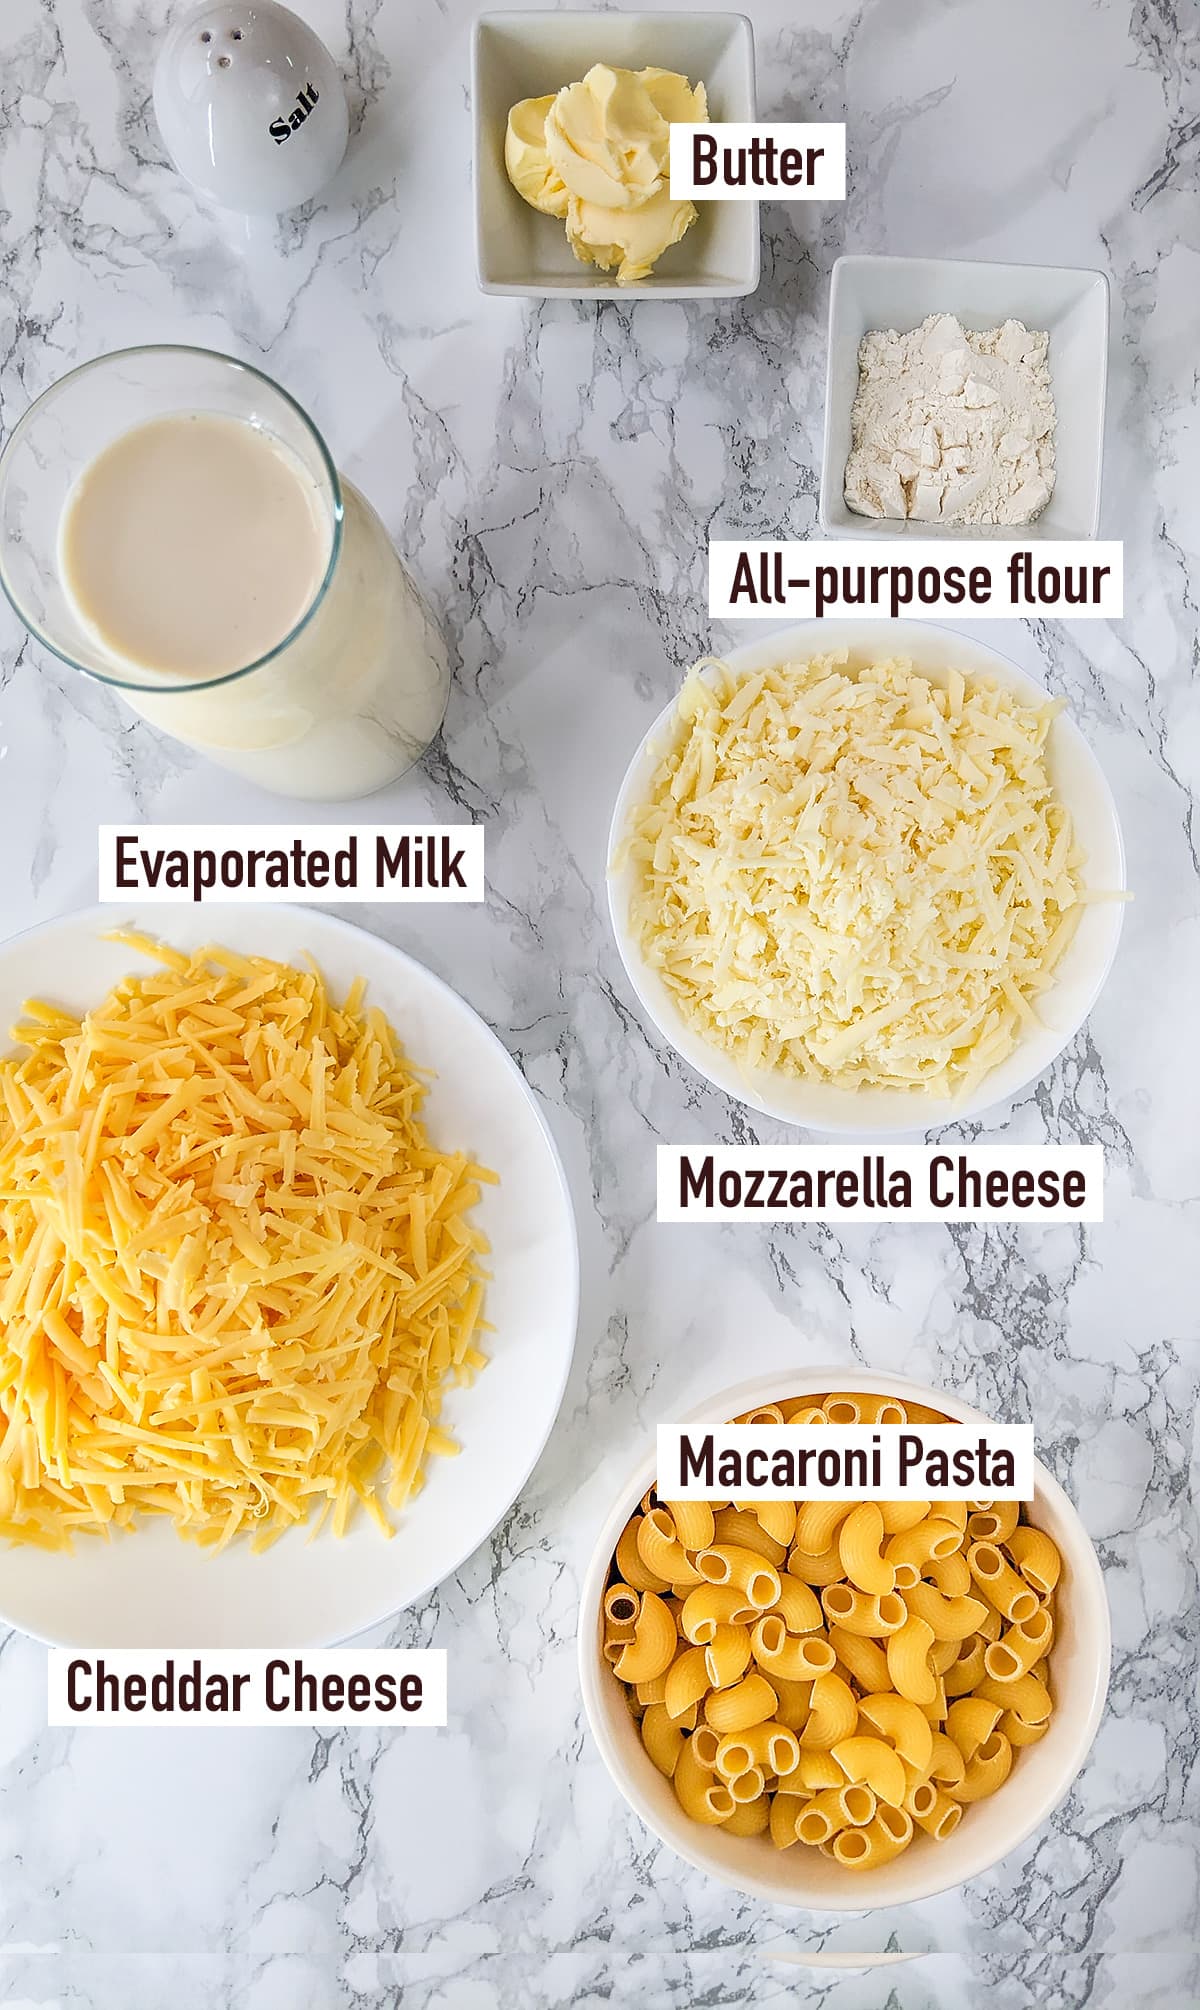 Macaroni pasta near cheddar, mozzarella, flour, butter and evaporated milk.